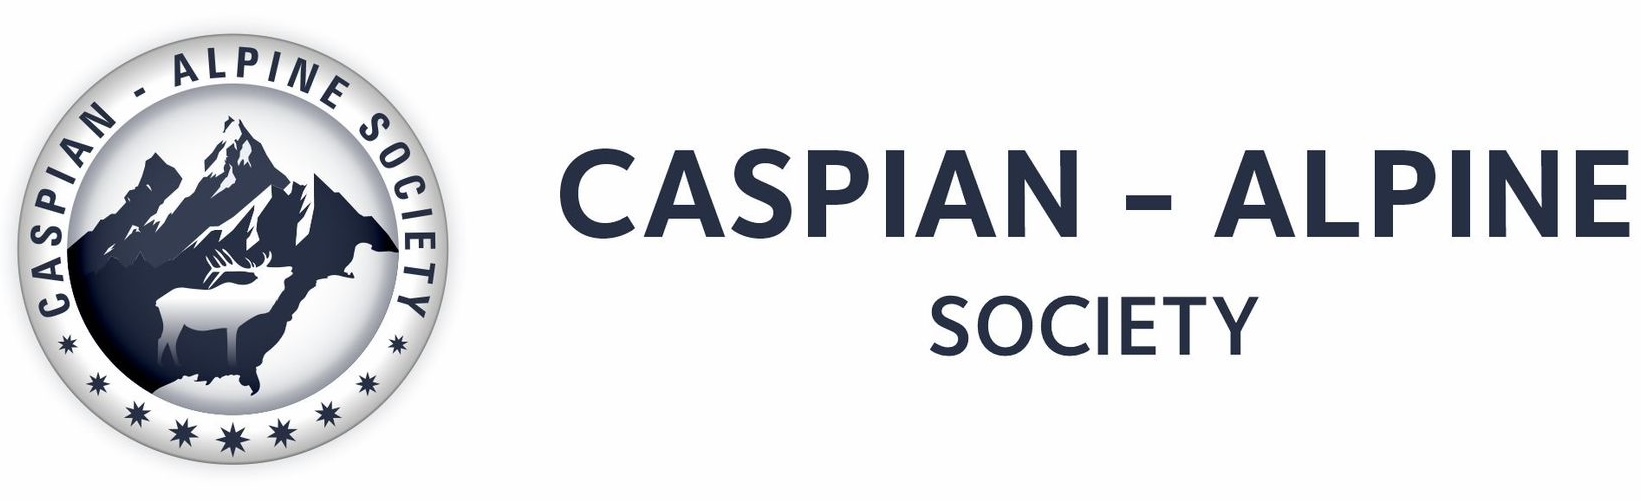 Caspian - Alpine Society